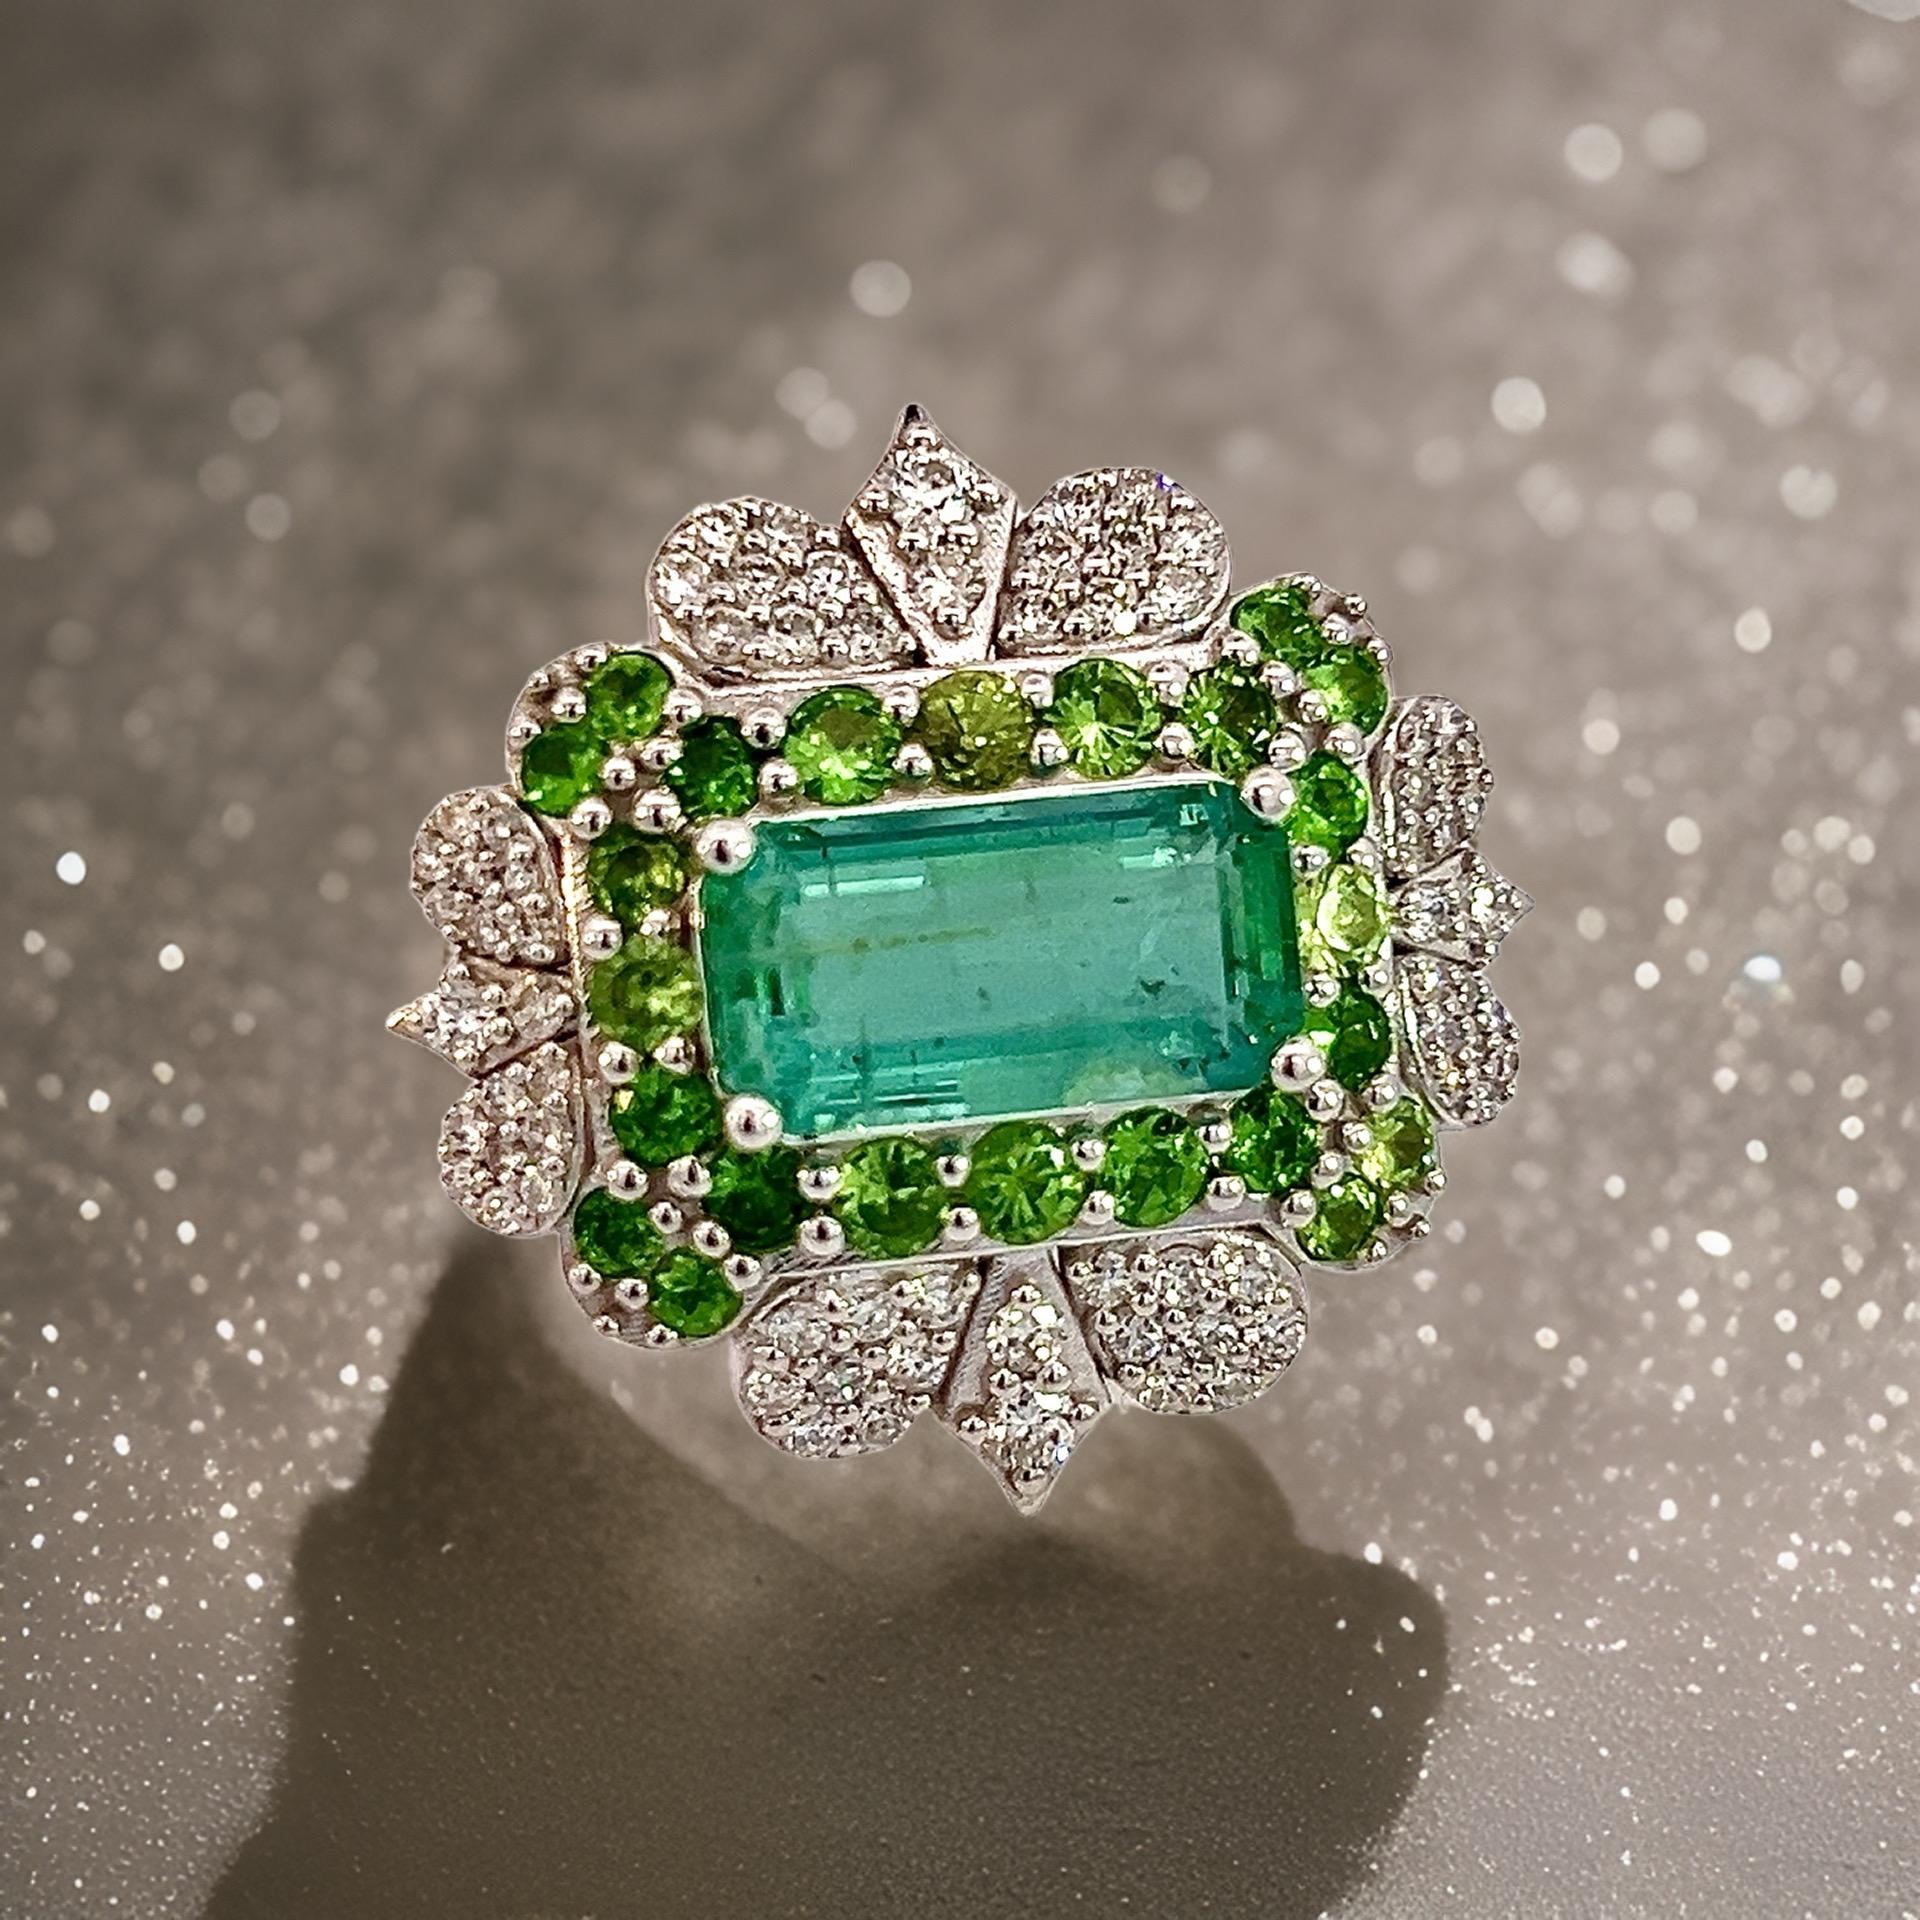 Natural Emerald Tsavorite Diamond Ring 6.75 14k White Gold 9.22 TCW Certified For Sale 7